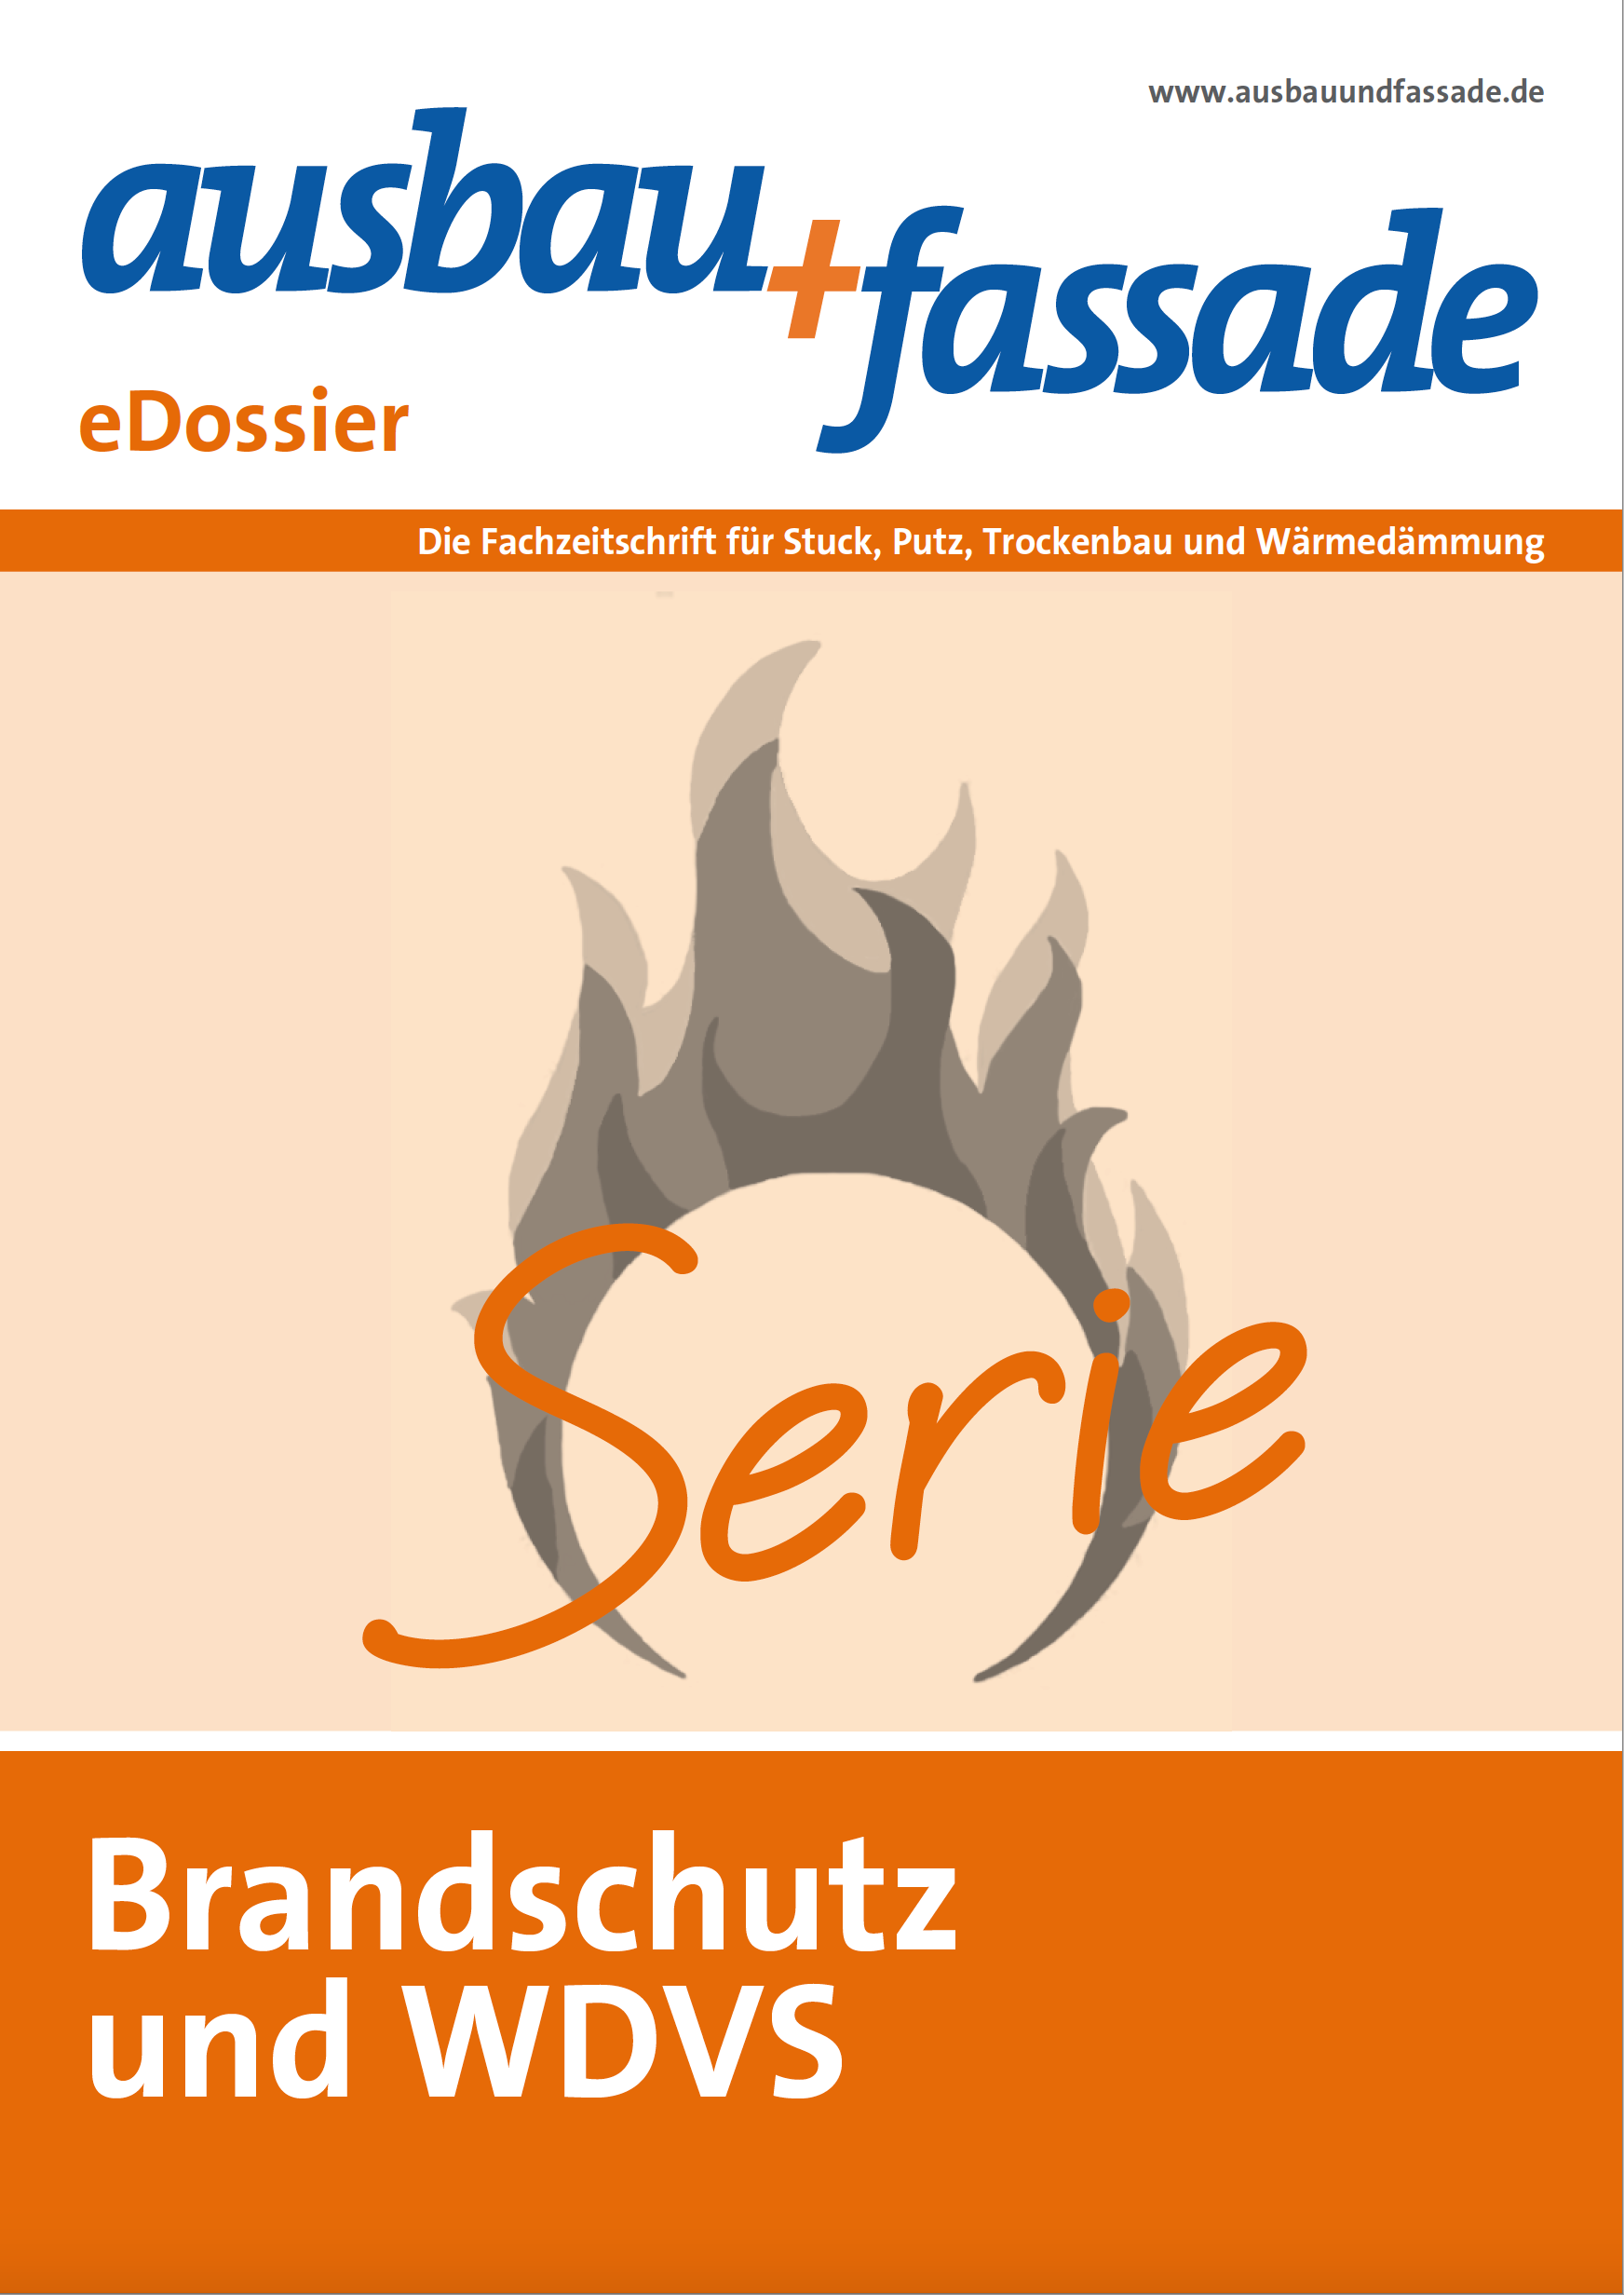 edossier_Brandschutz